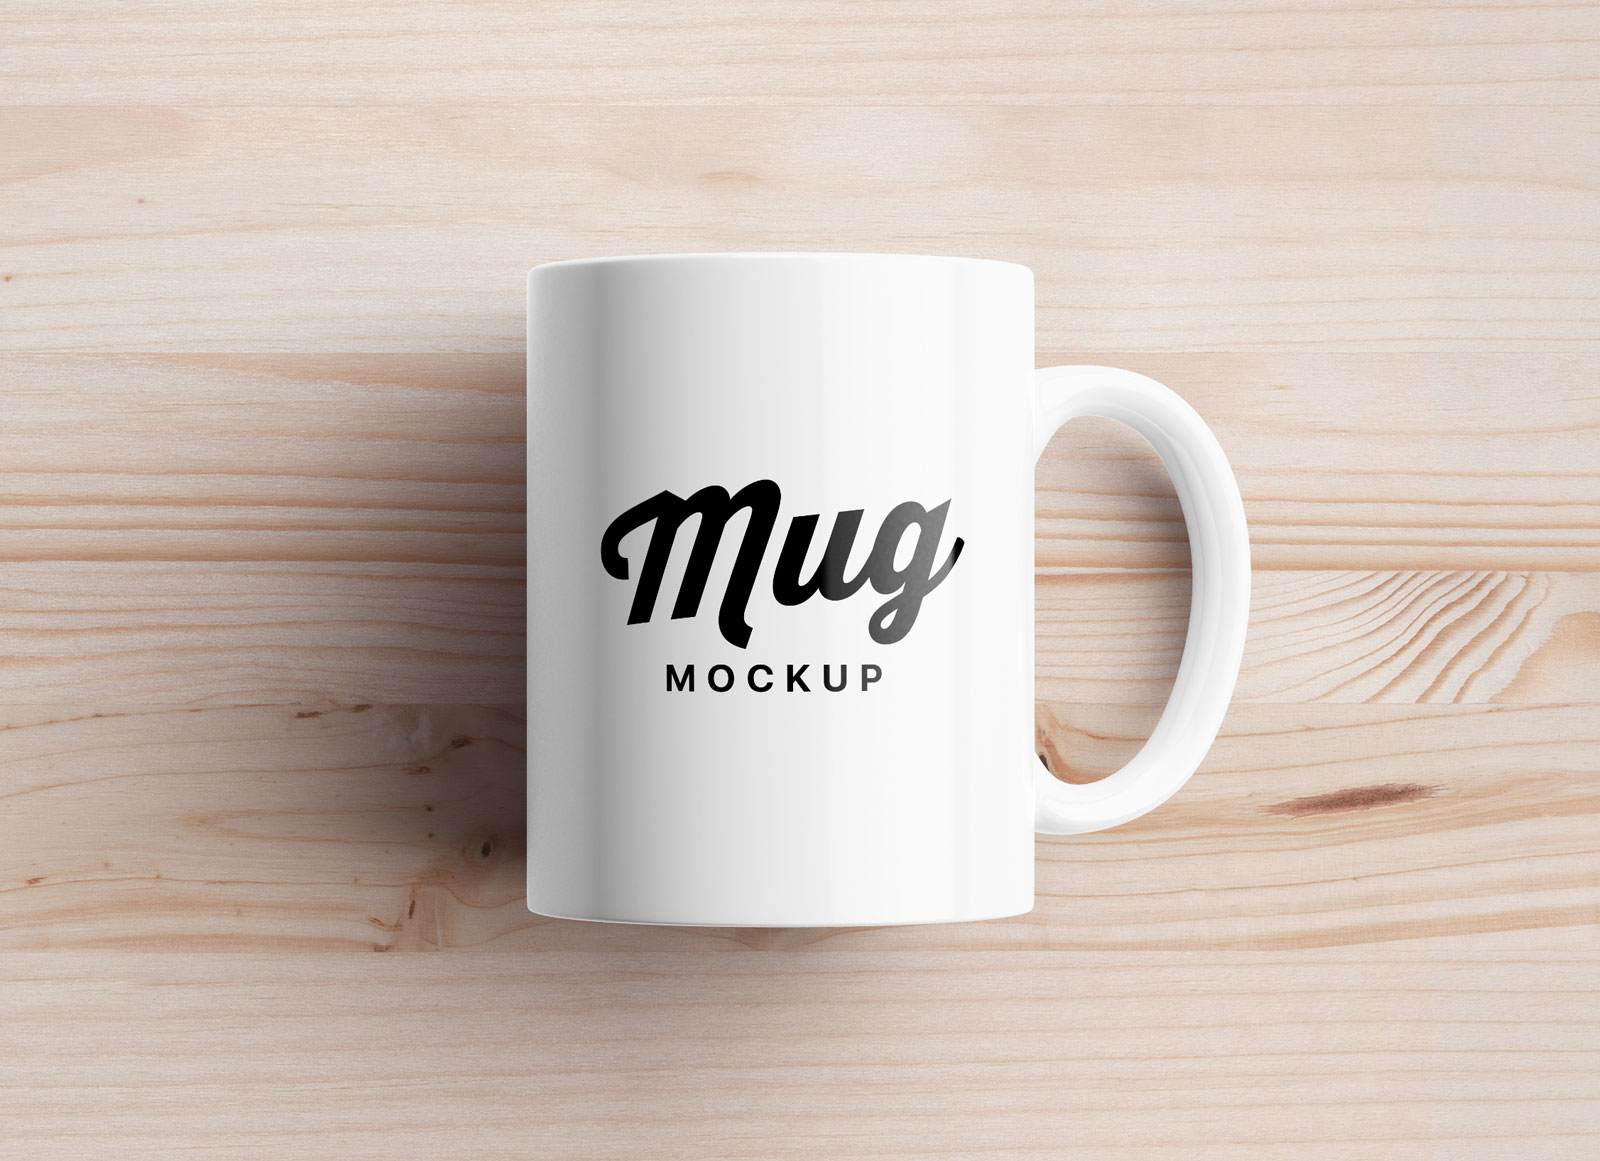 Download Free Mug Mockup PSD Set with 4 Different Angles - Good Mockups PSD Mockup Templates